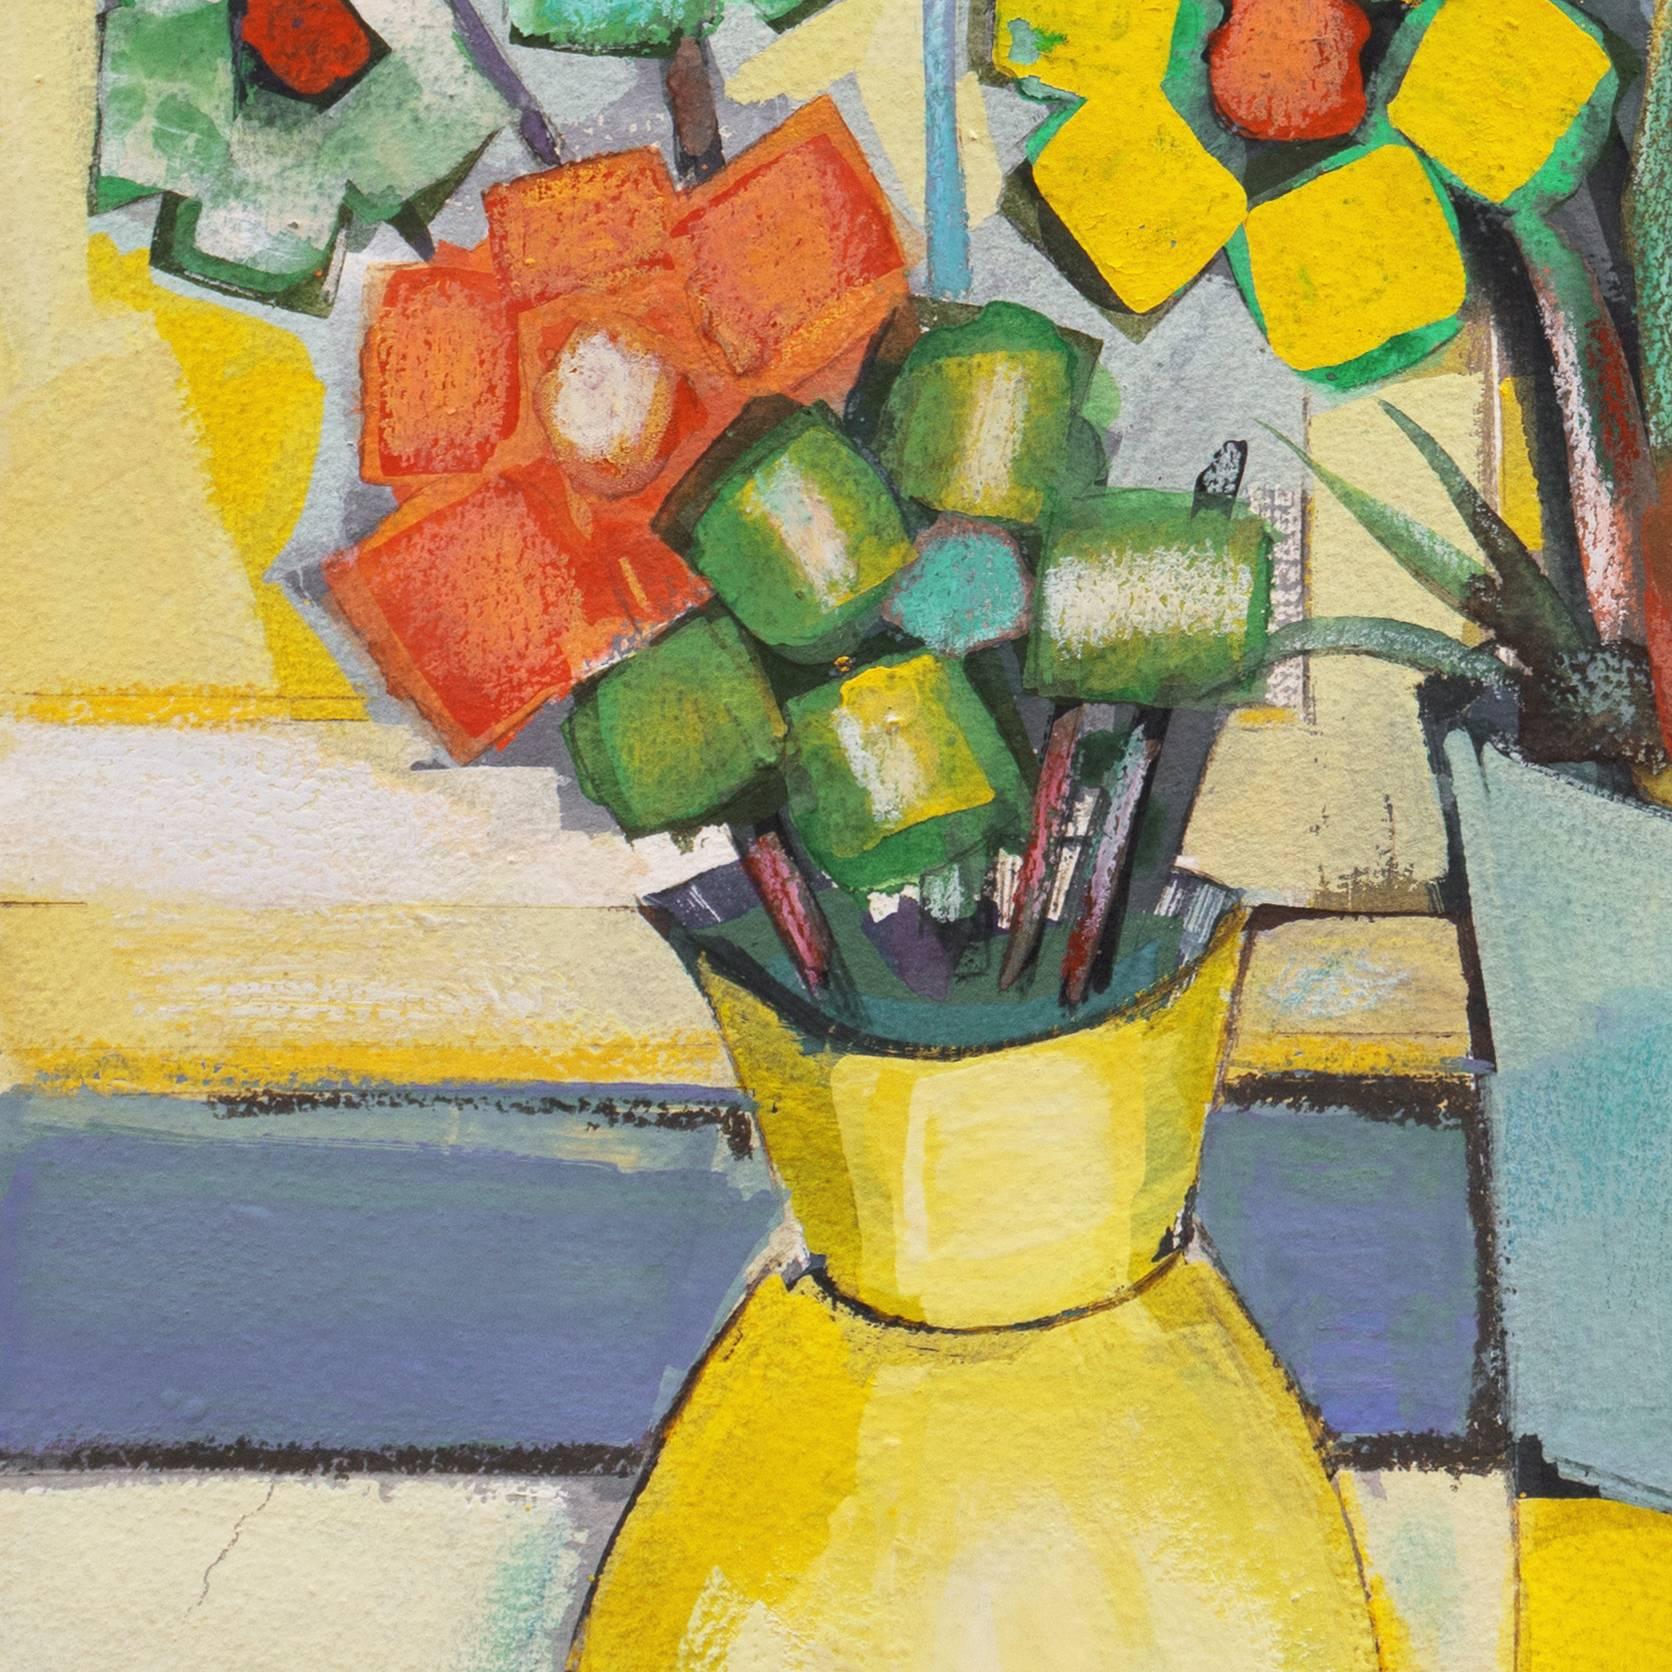  'Still Life of Flowers', Post Impressionist, Paris Salon, Ecole des Beaux Arts - Modern Mixed Media Art by Rene Couturier